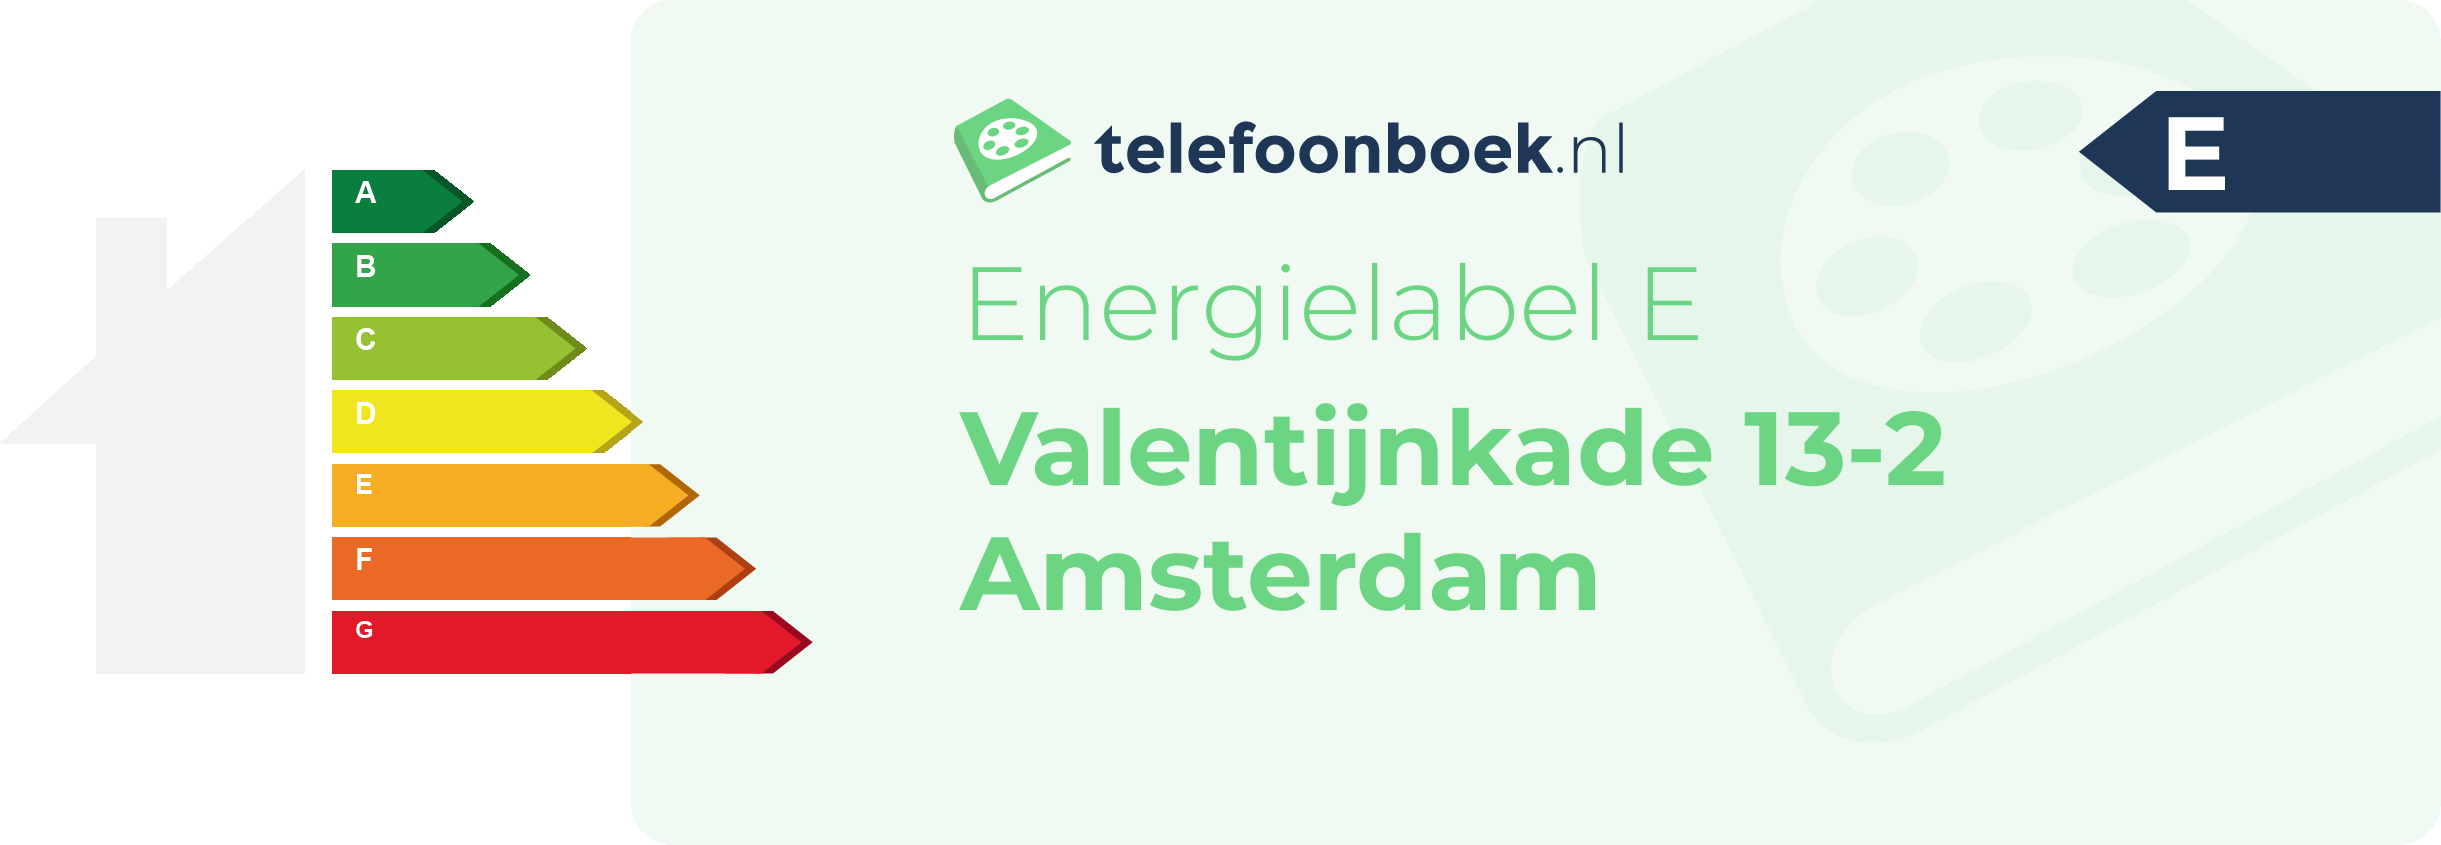 Energielabel Valentijnkade 13-2 Amsterdam